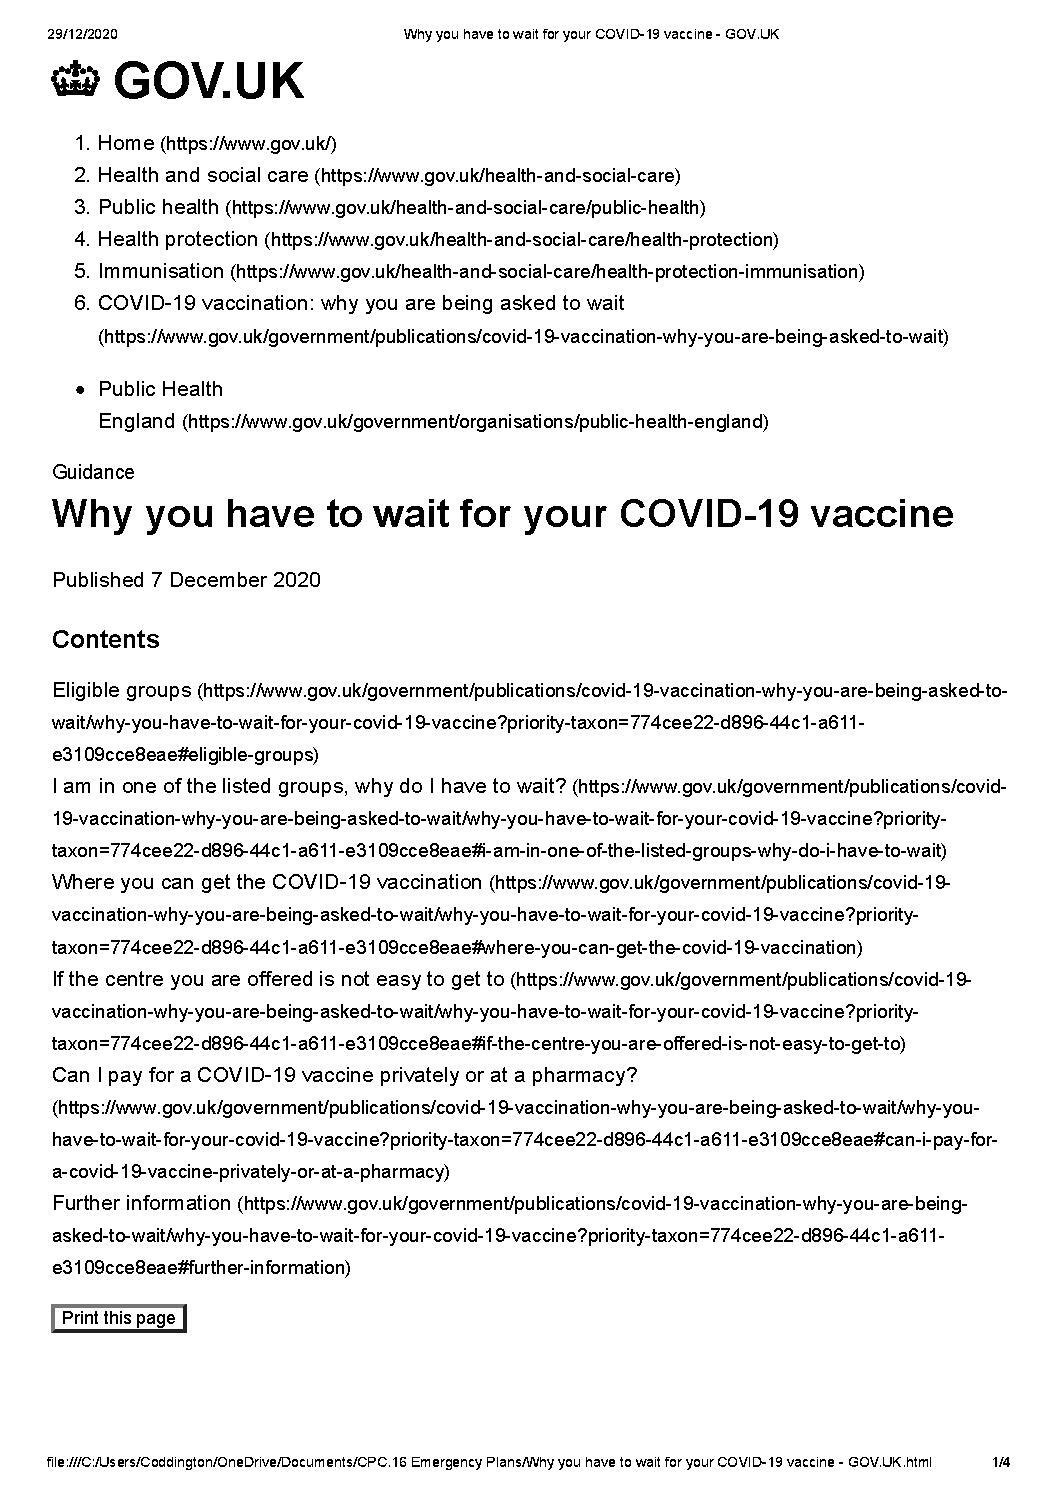 Covid-19 Vaccination Programme